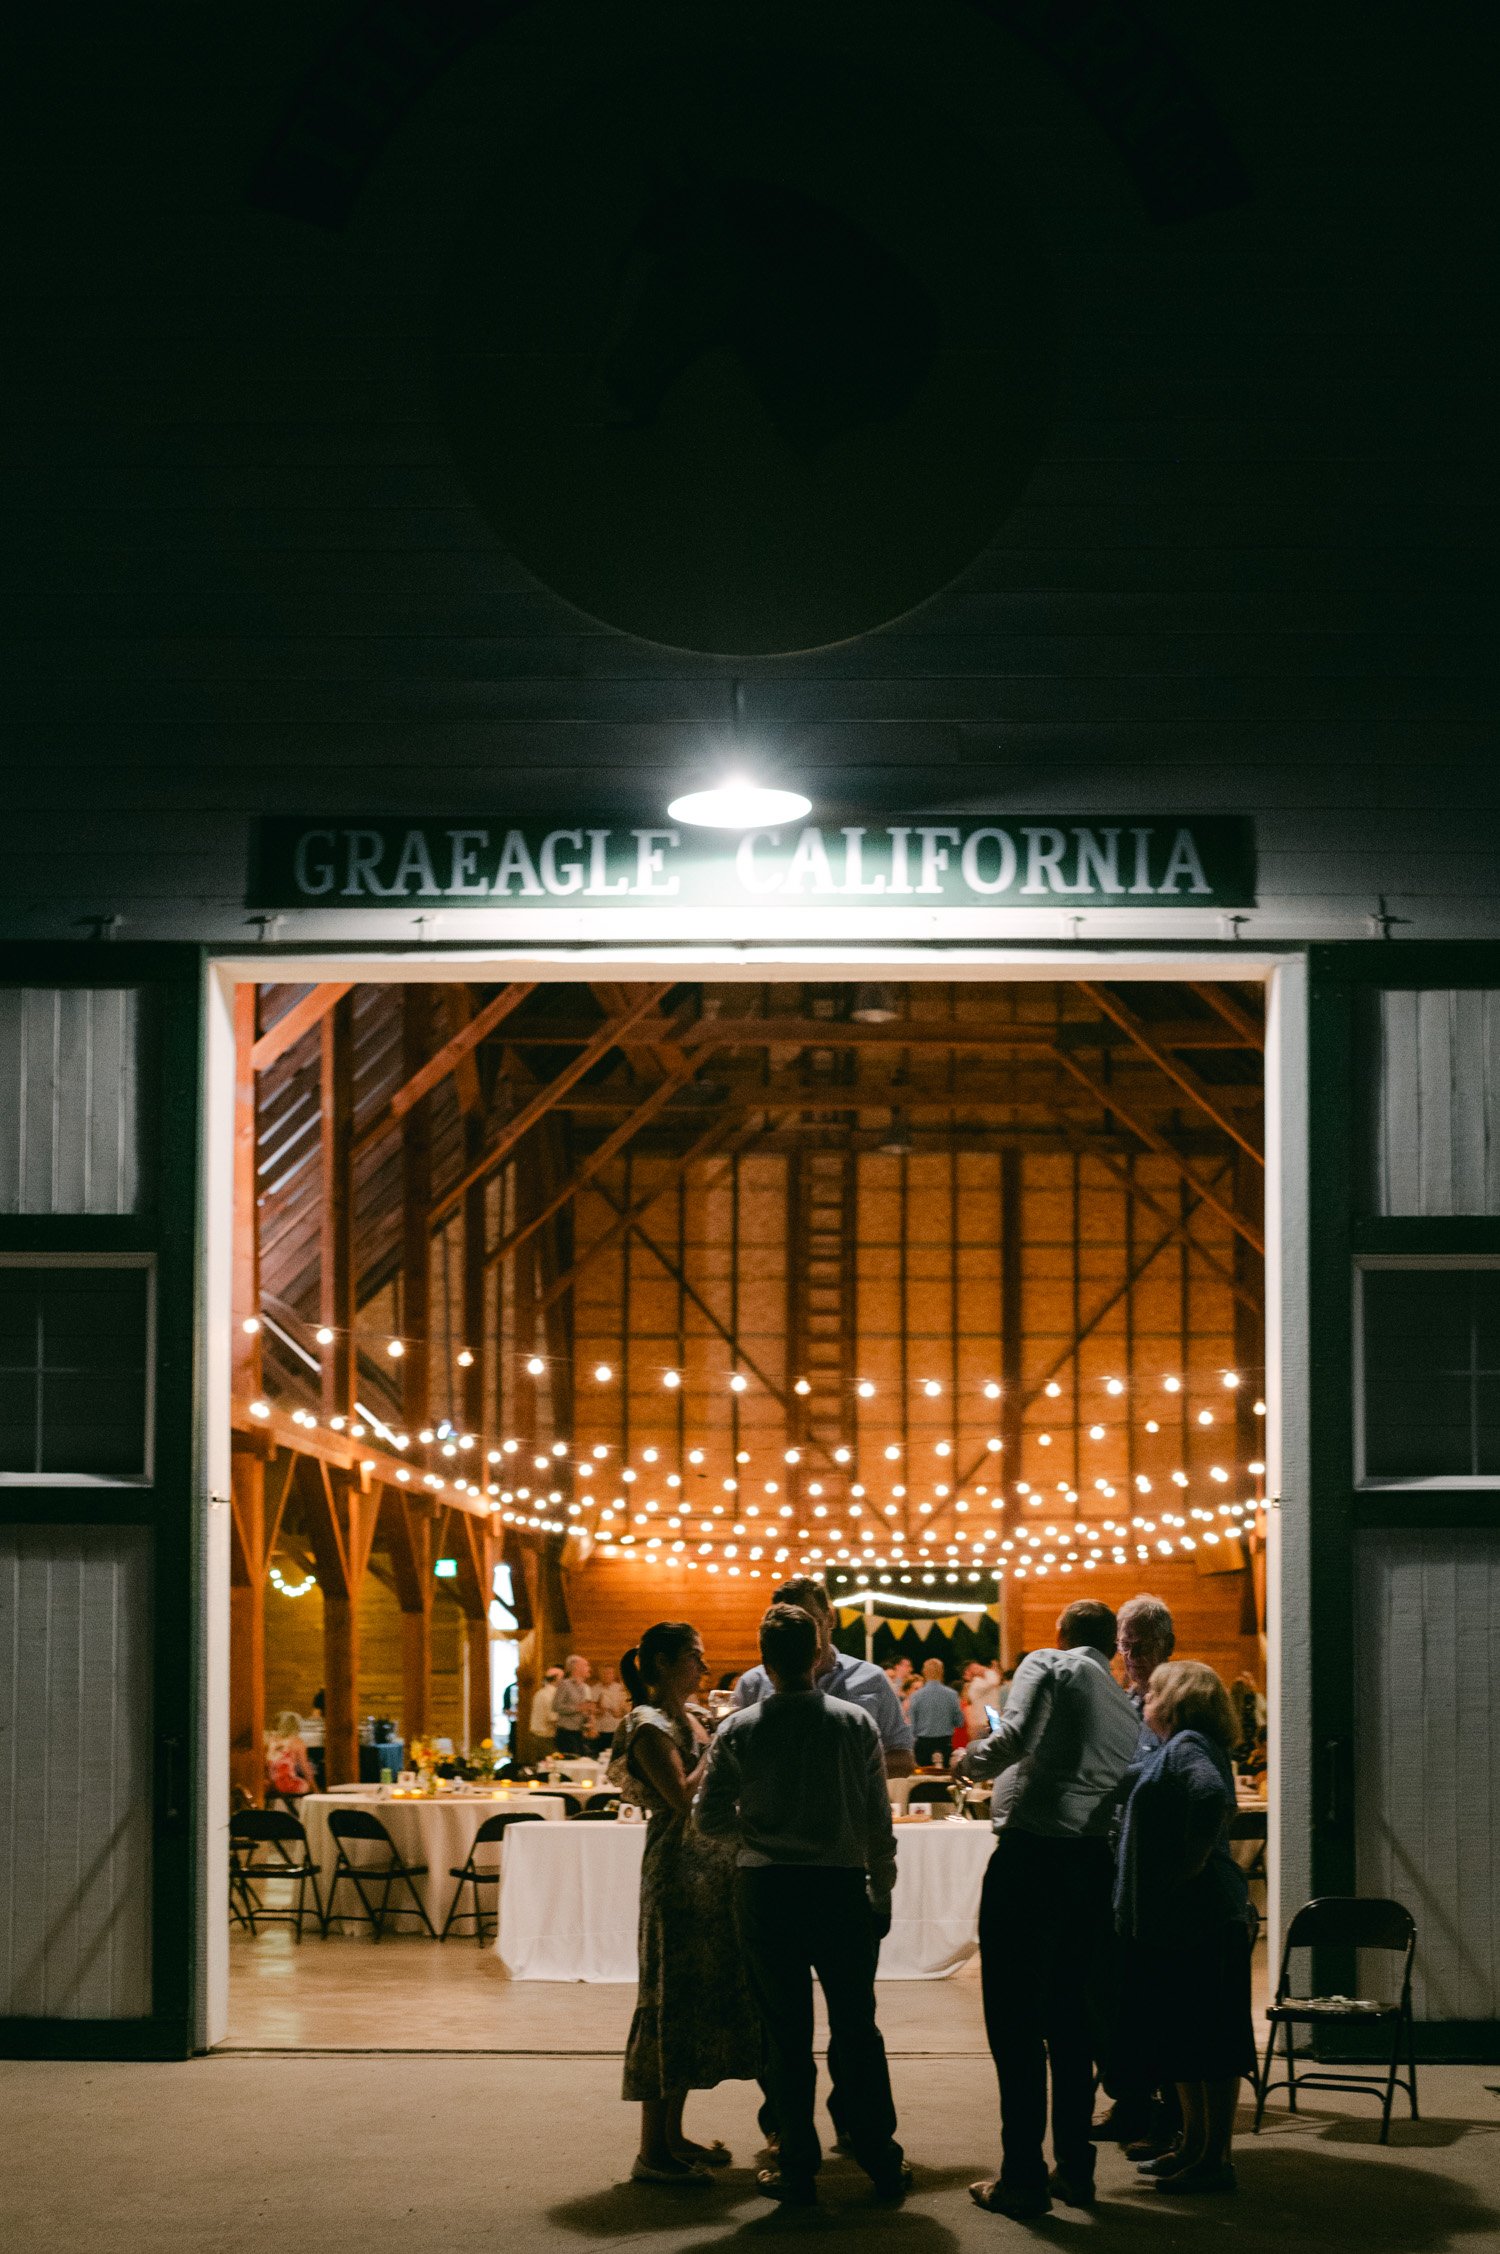 graeagle corner barn wedding, photo of the wedding venue at night with twinkling lights